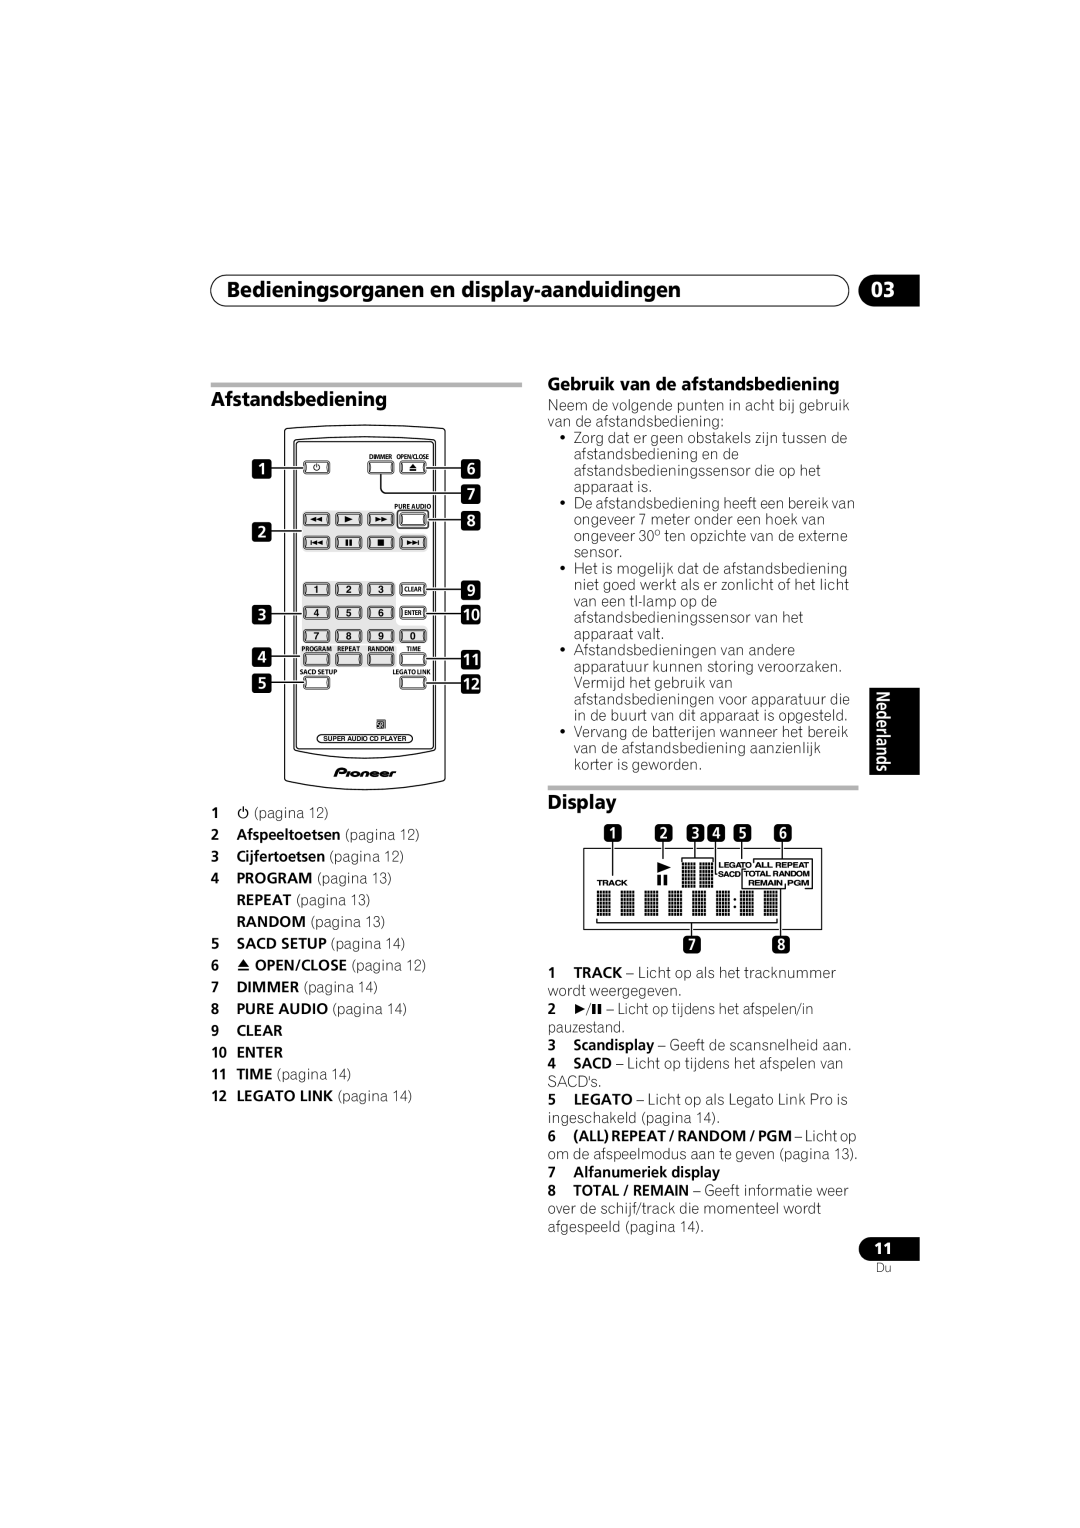 Pioneer PD-D6-J manual Bedieningsorganen en display-aanduidingen, Afstandsbediening, Gebruik van de afstandsbediening 